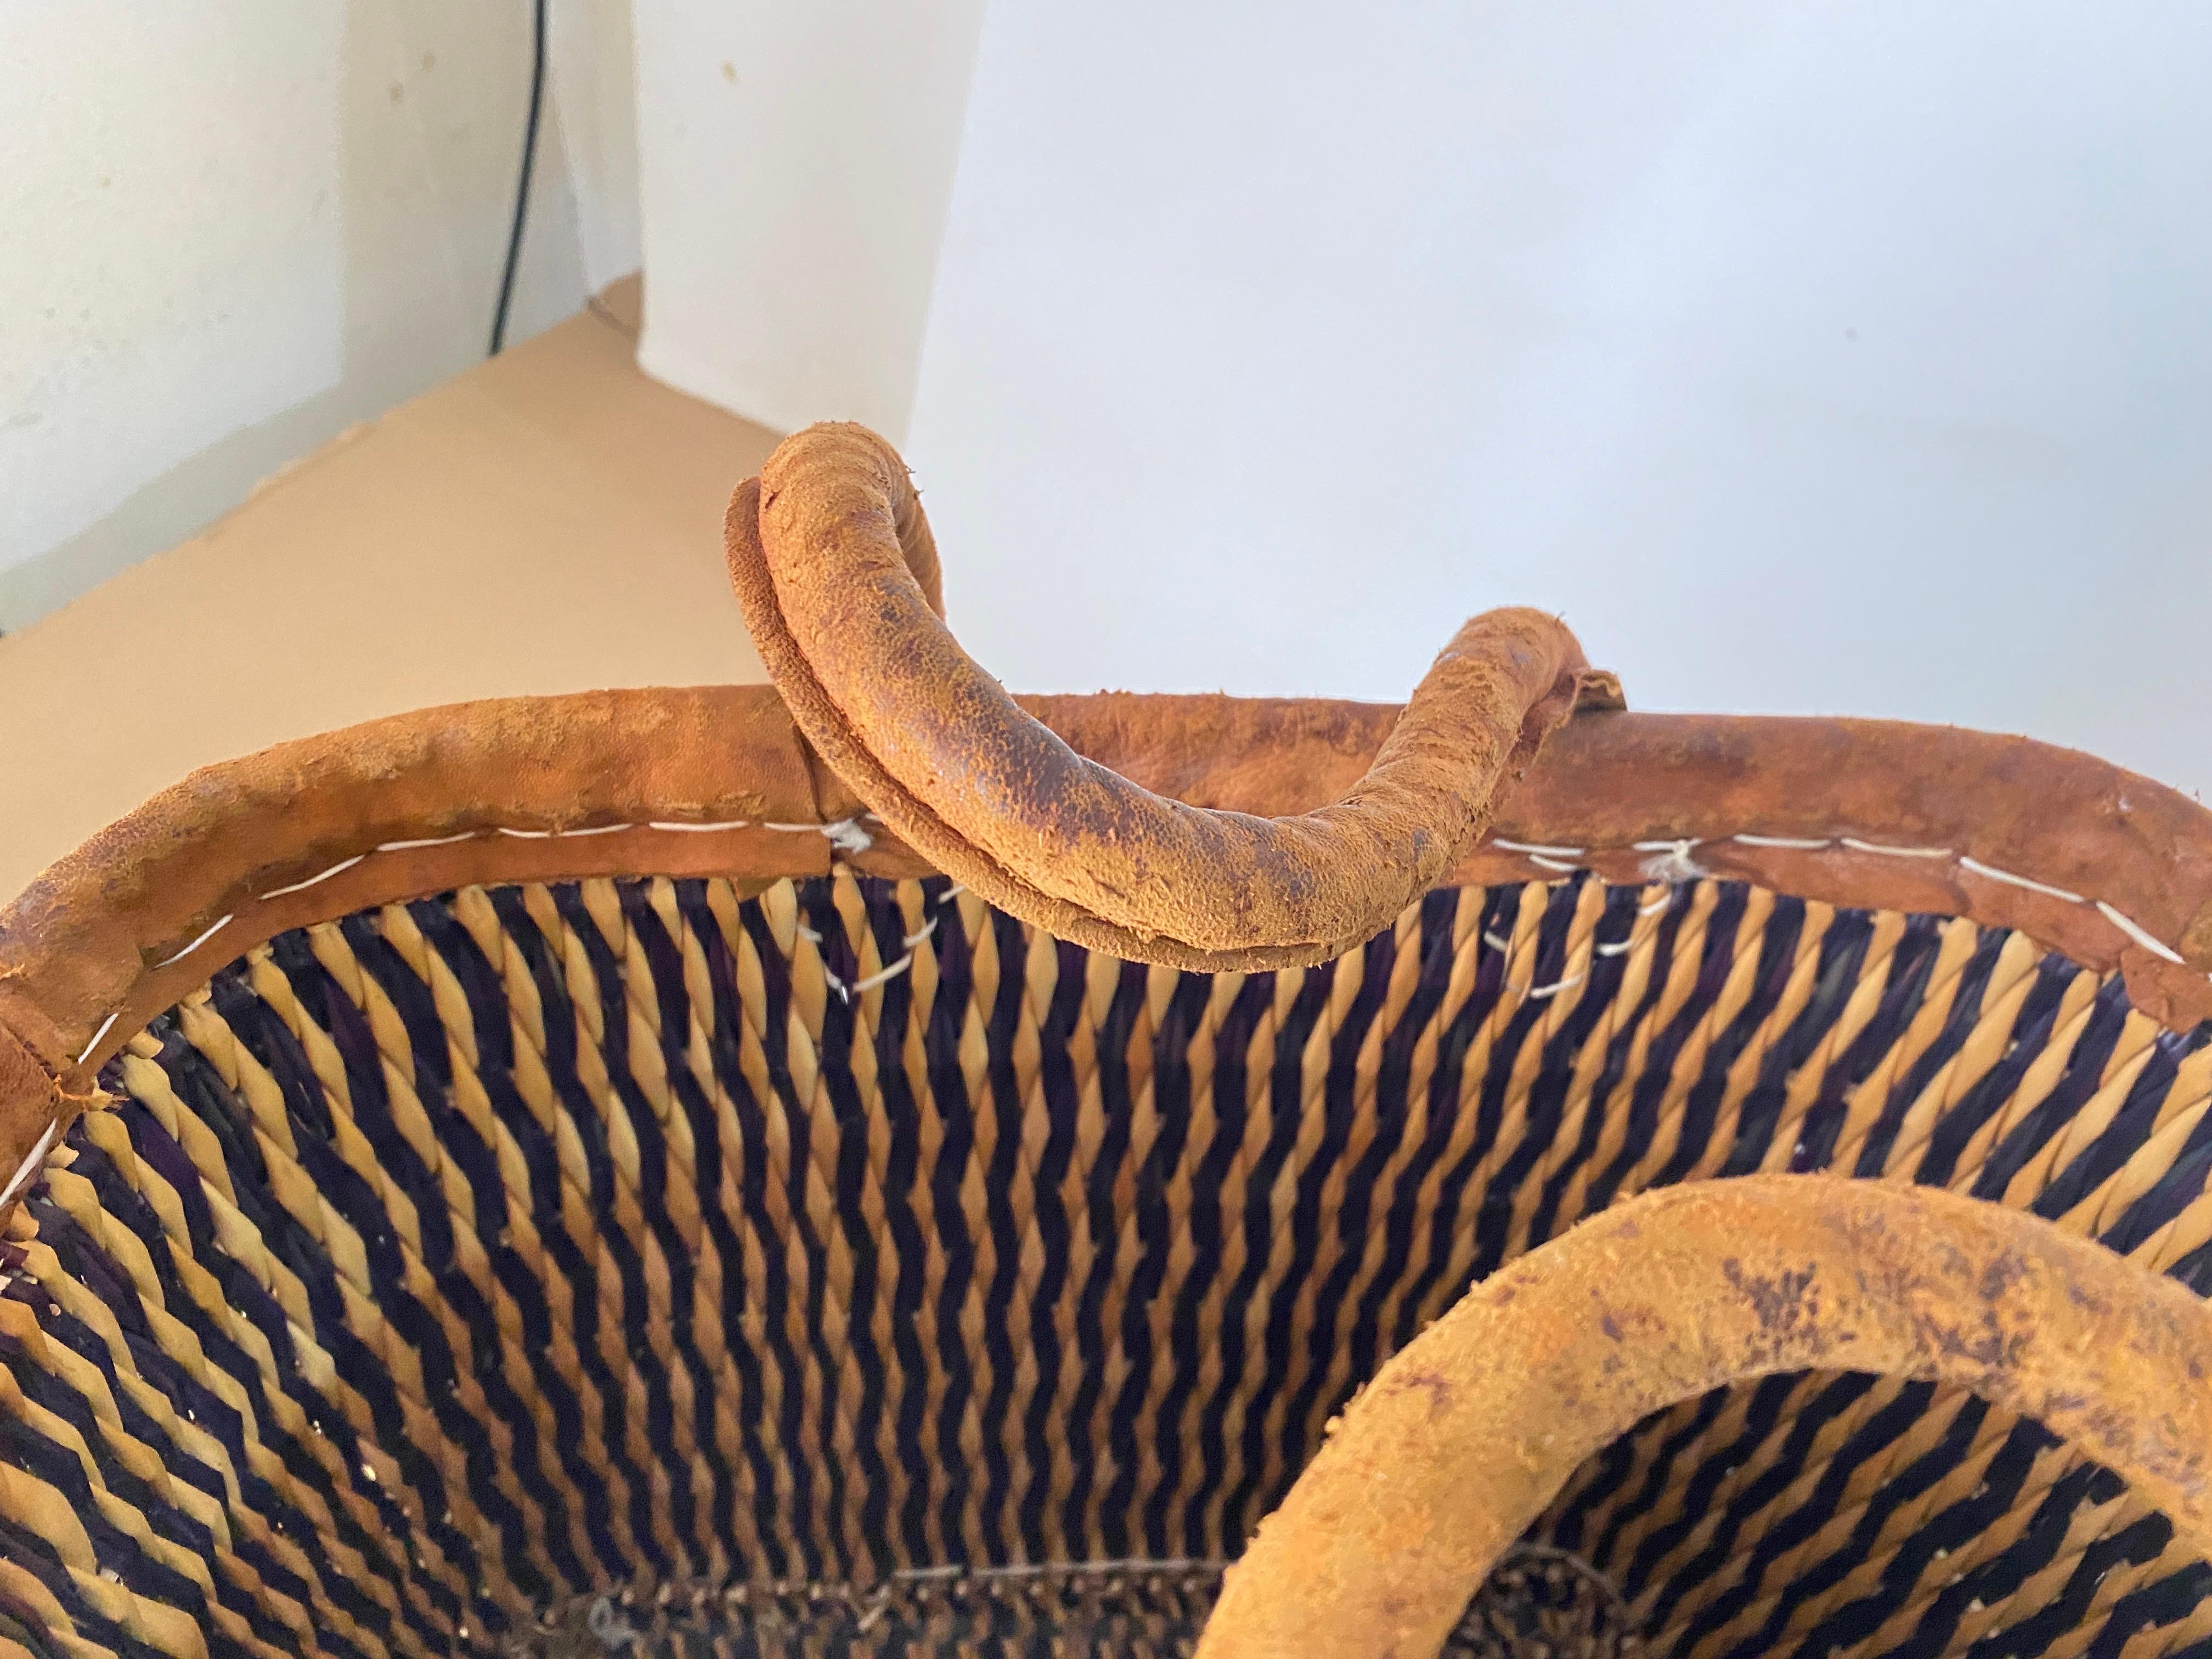 Vintage French Wicker Basket, Gold Color Stitched Leather Bag Handles France For Sale 23